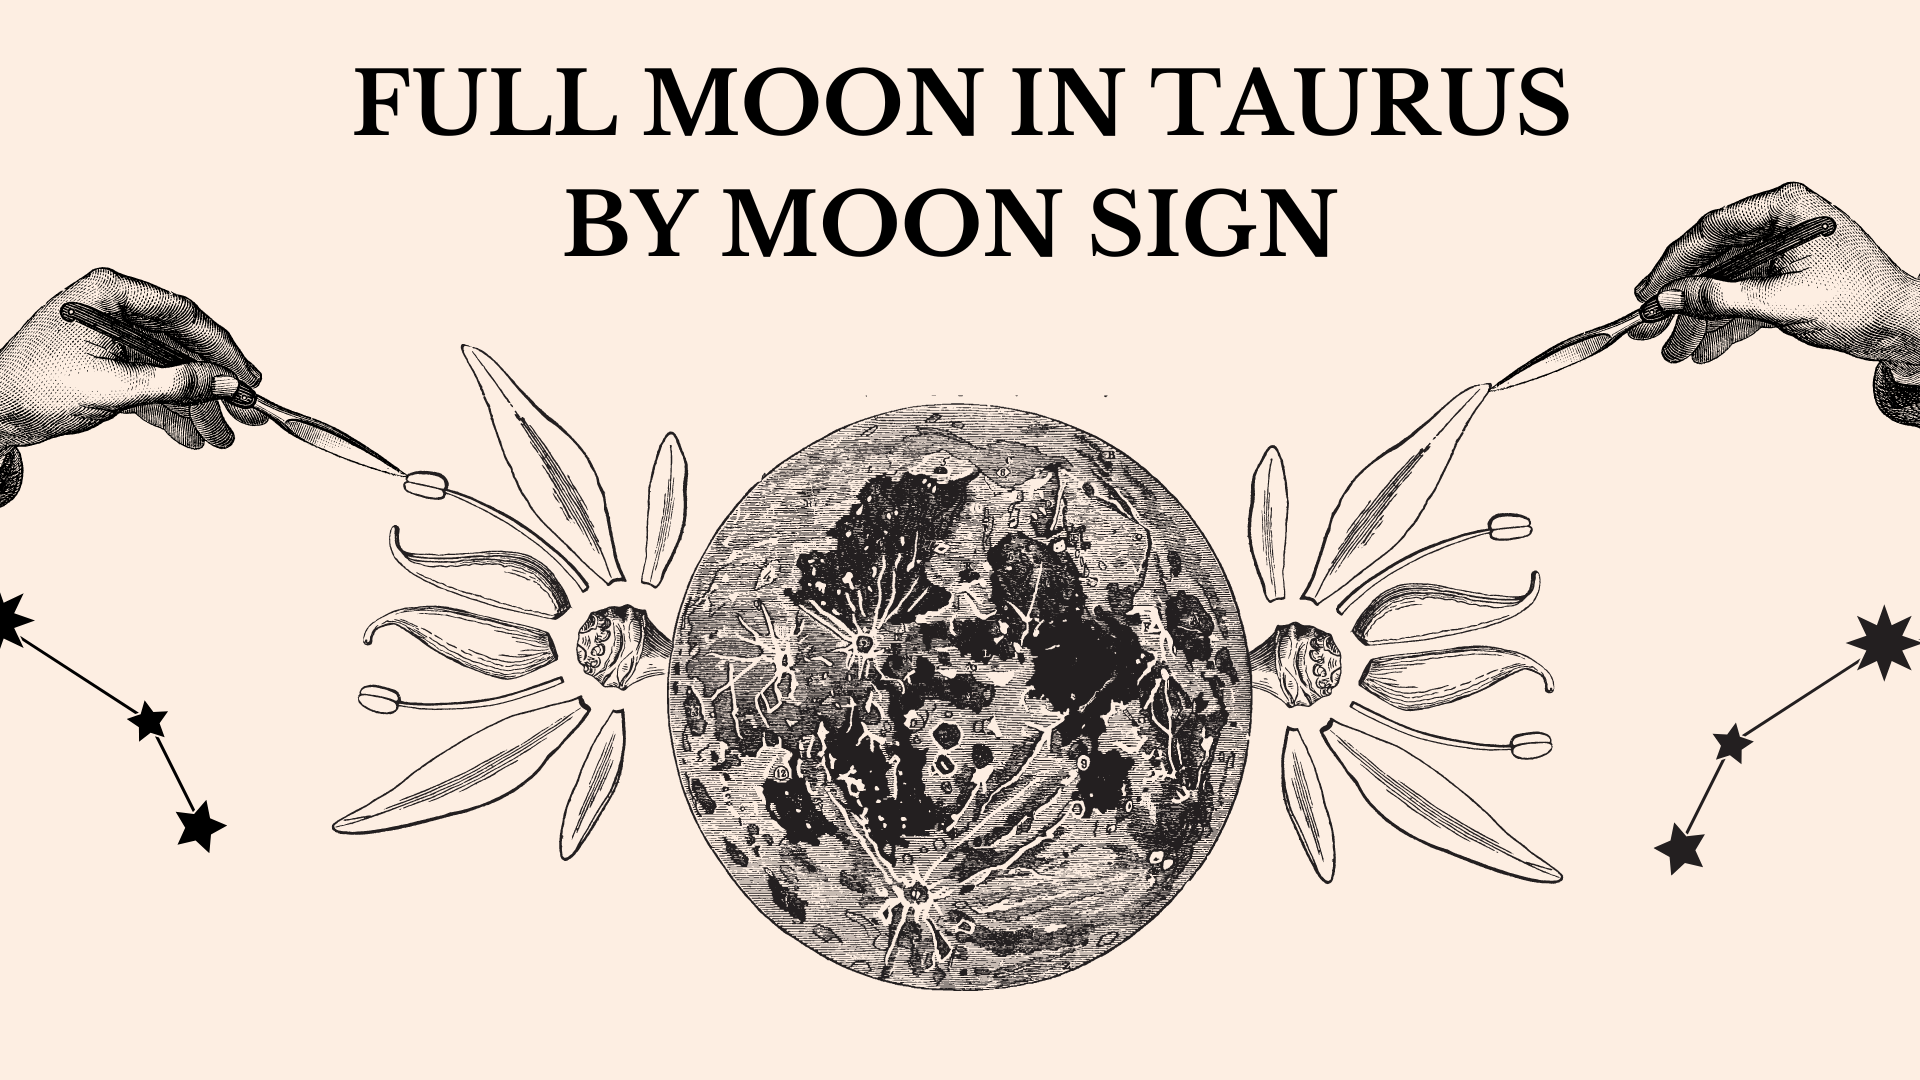 Eclipse of the Taurus Full Moon